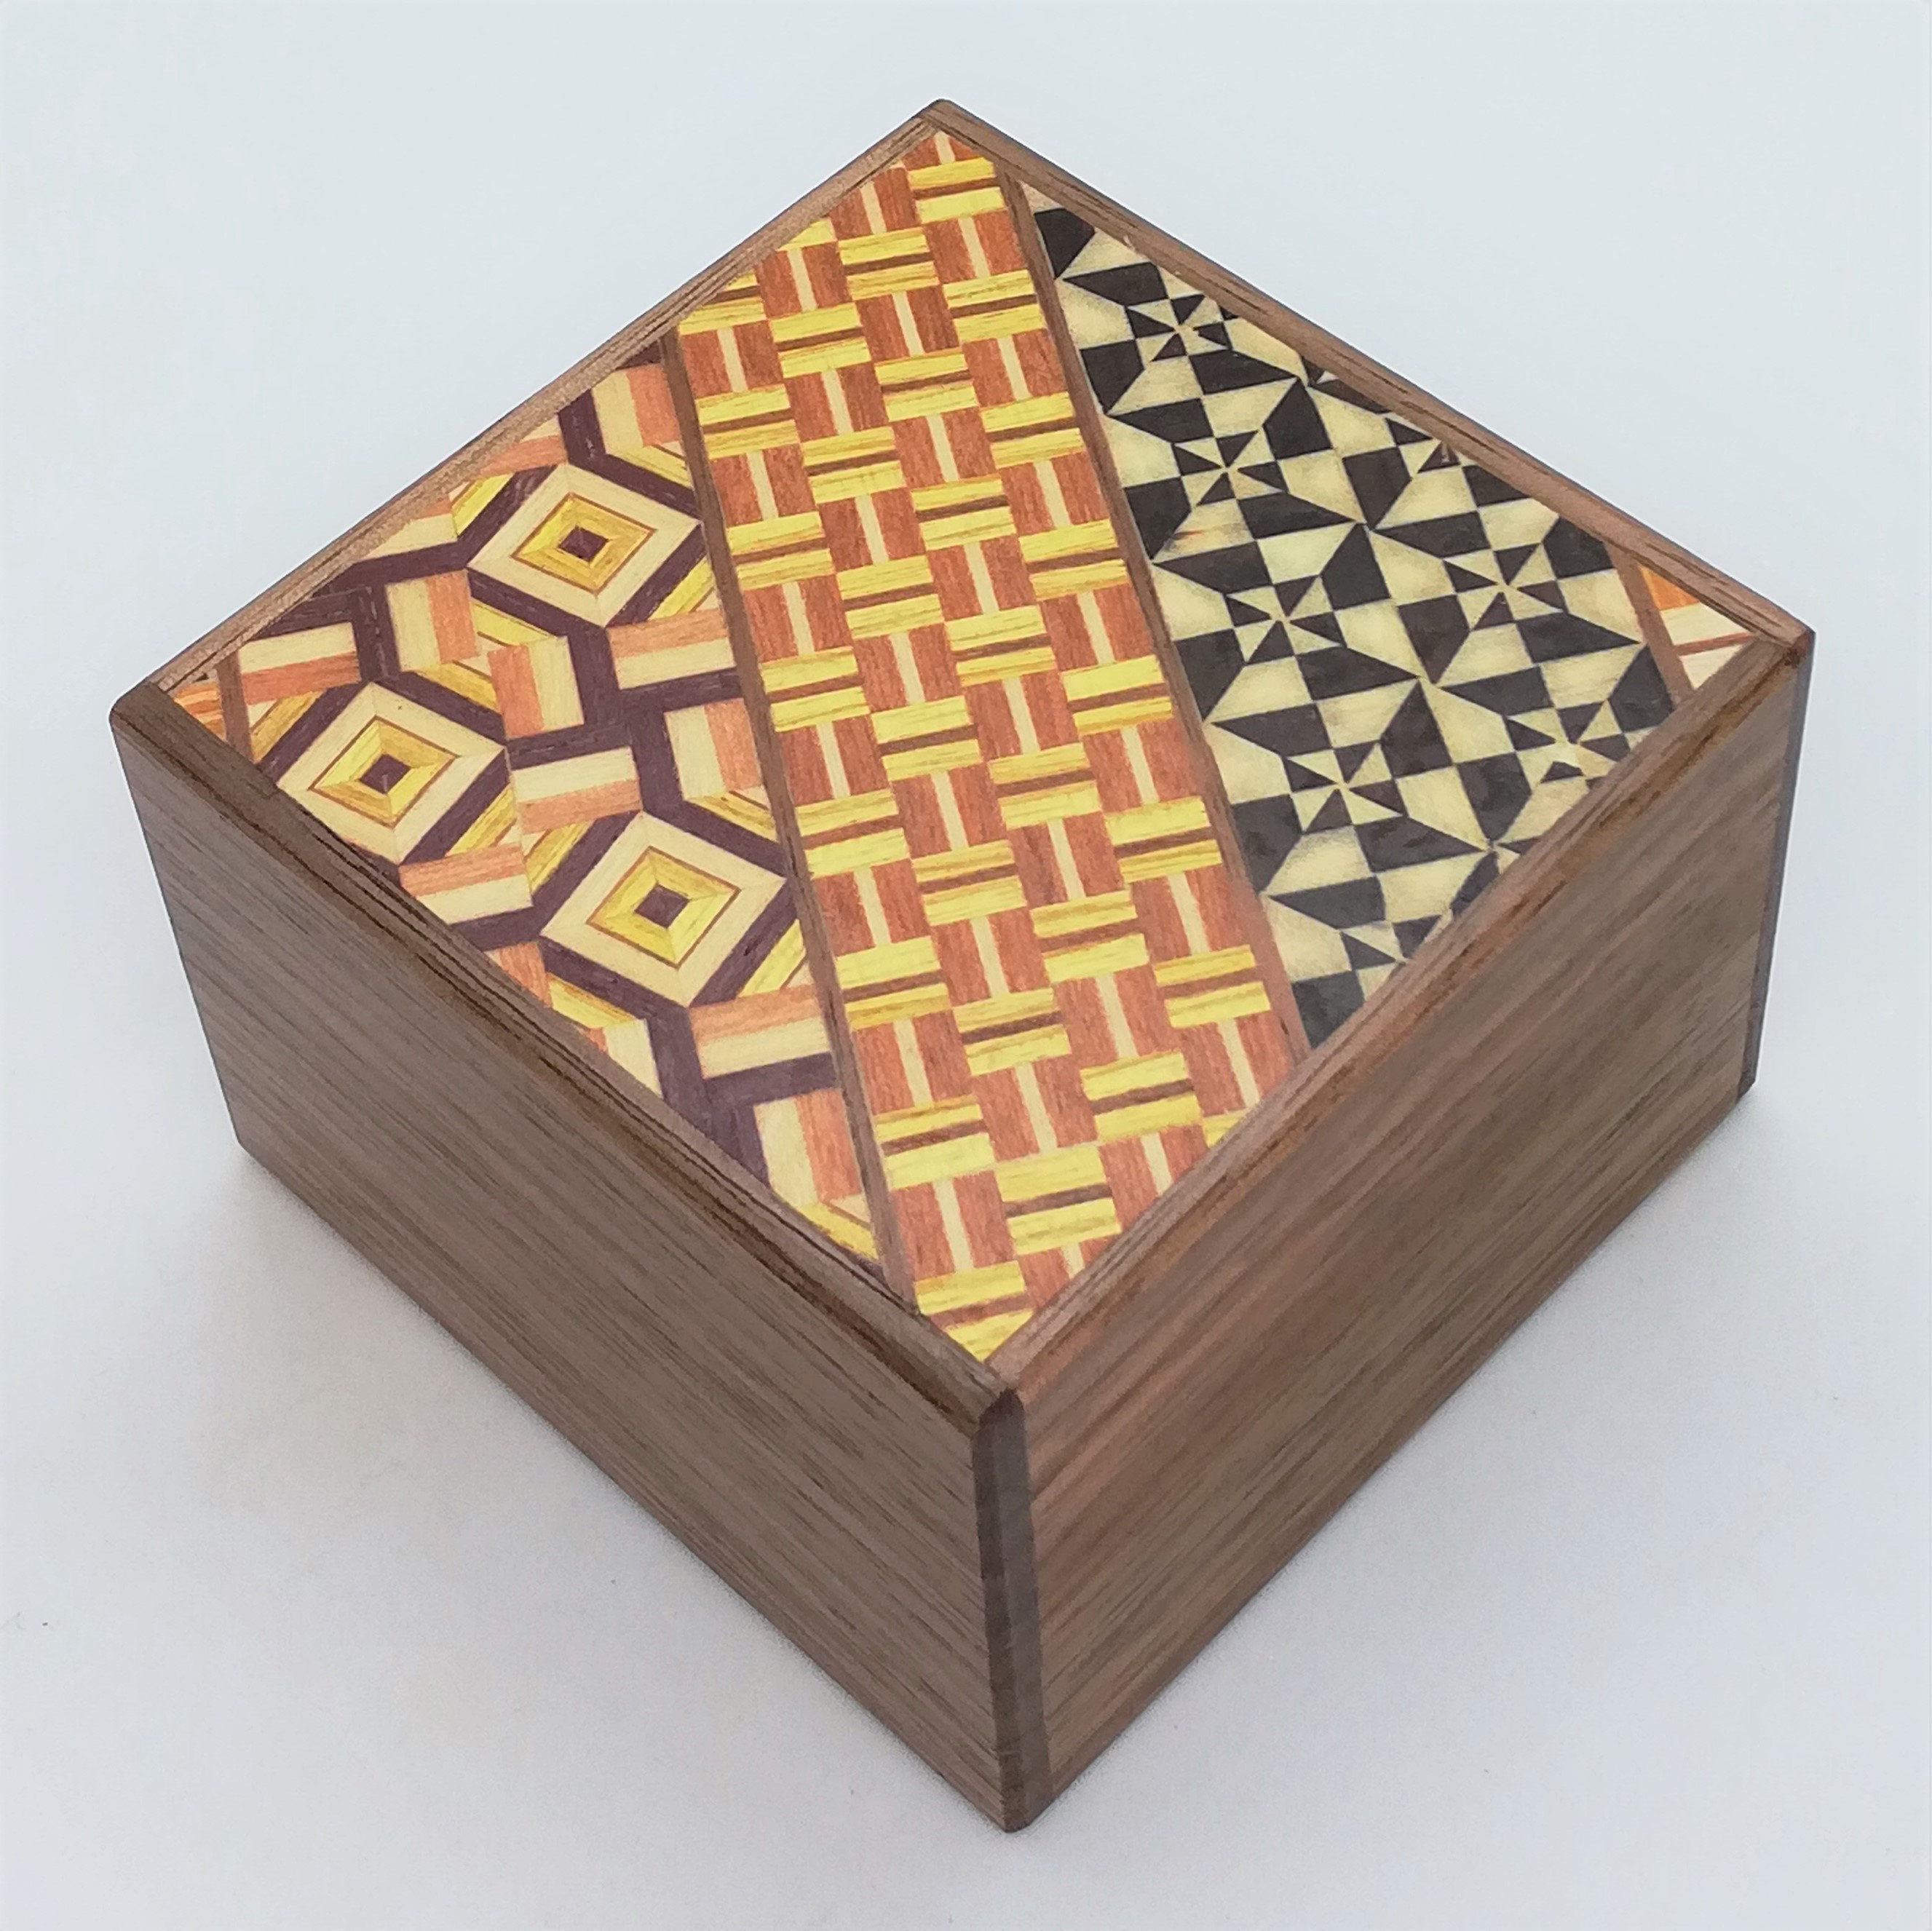 Square 12 Steps UK Mensa Japanese Puzzle Wooden Magic Box Trick Cube 